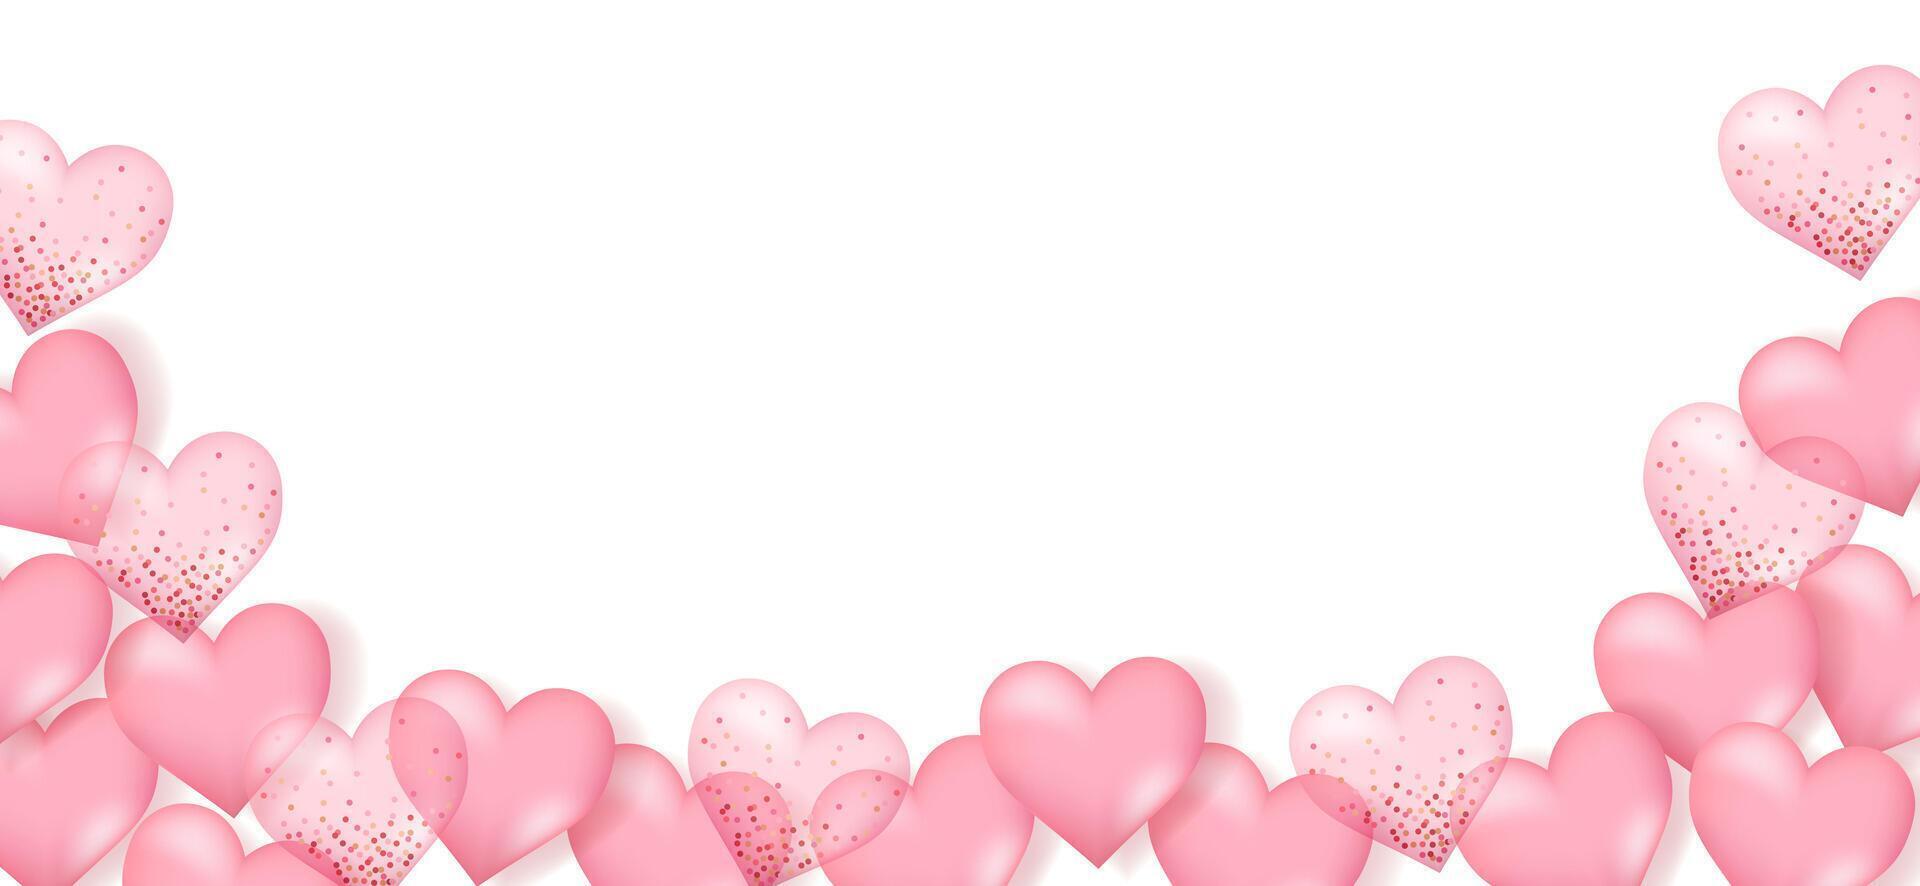 San Valentín día antecedentes. 3d corazones con sitio para texto. romántico rebaja pancartas plantillas, fondo o invitación tarjetas para boda. vector ilustración.